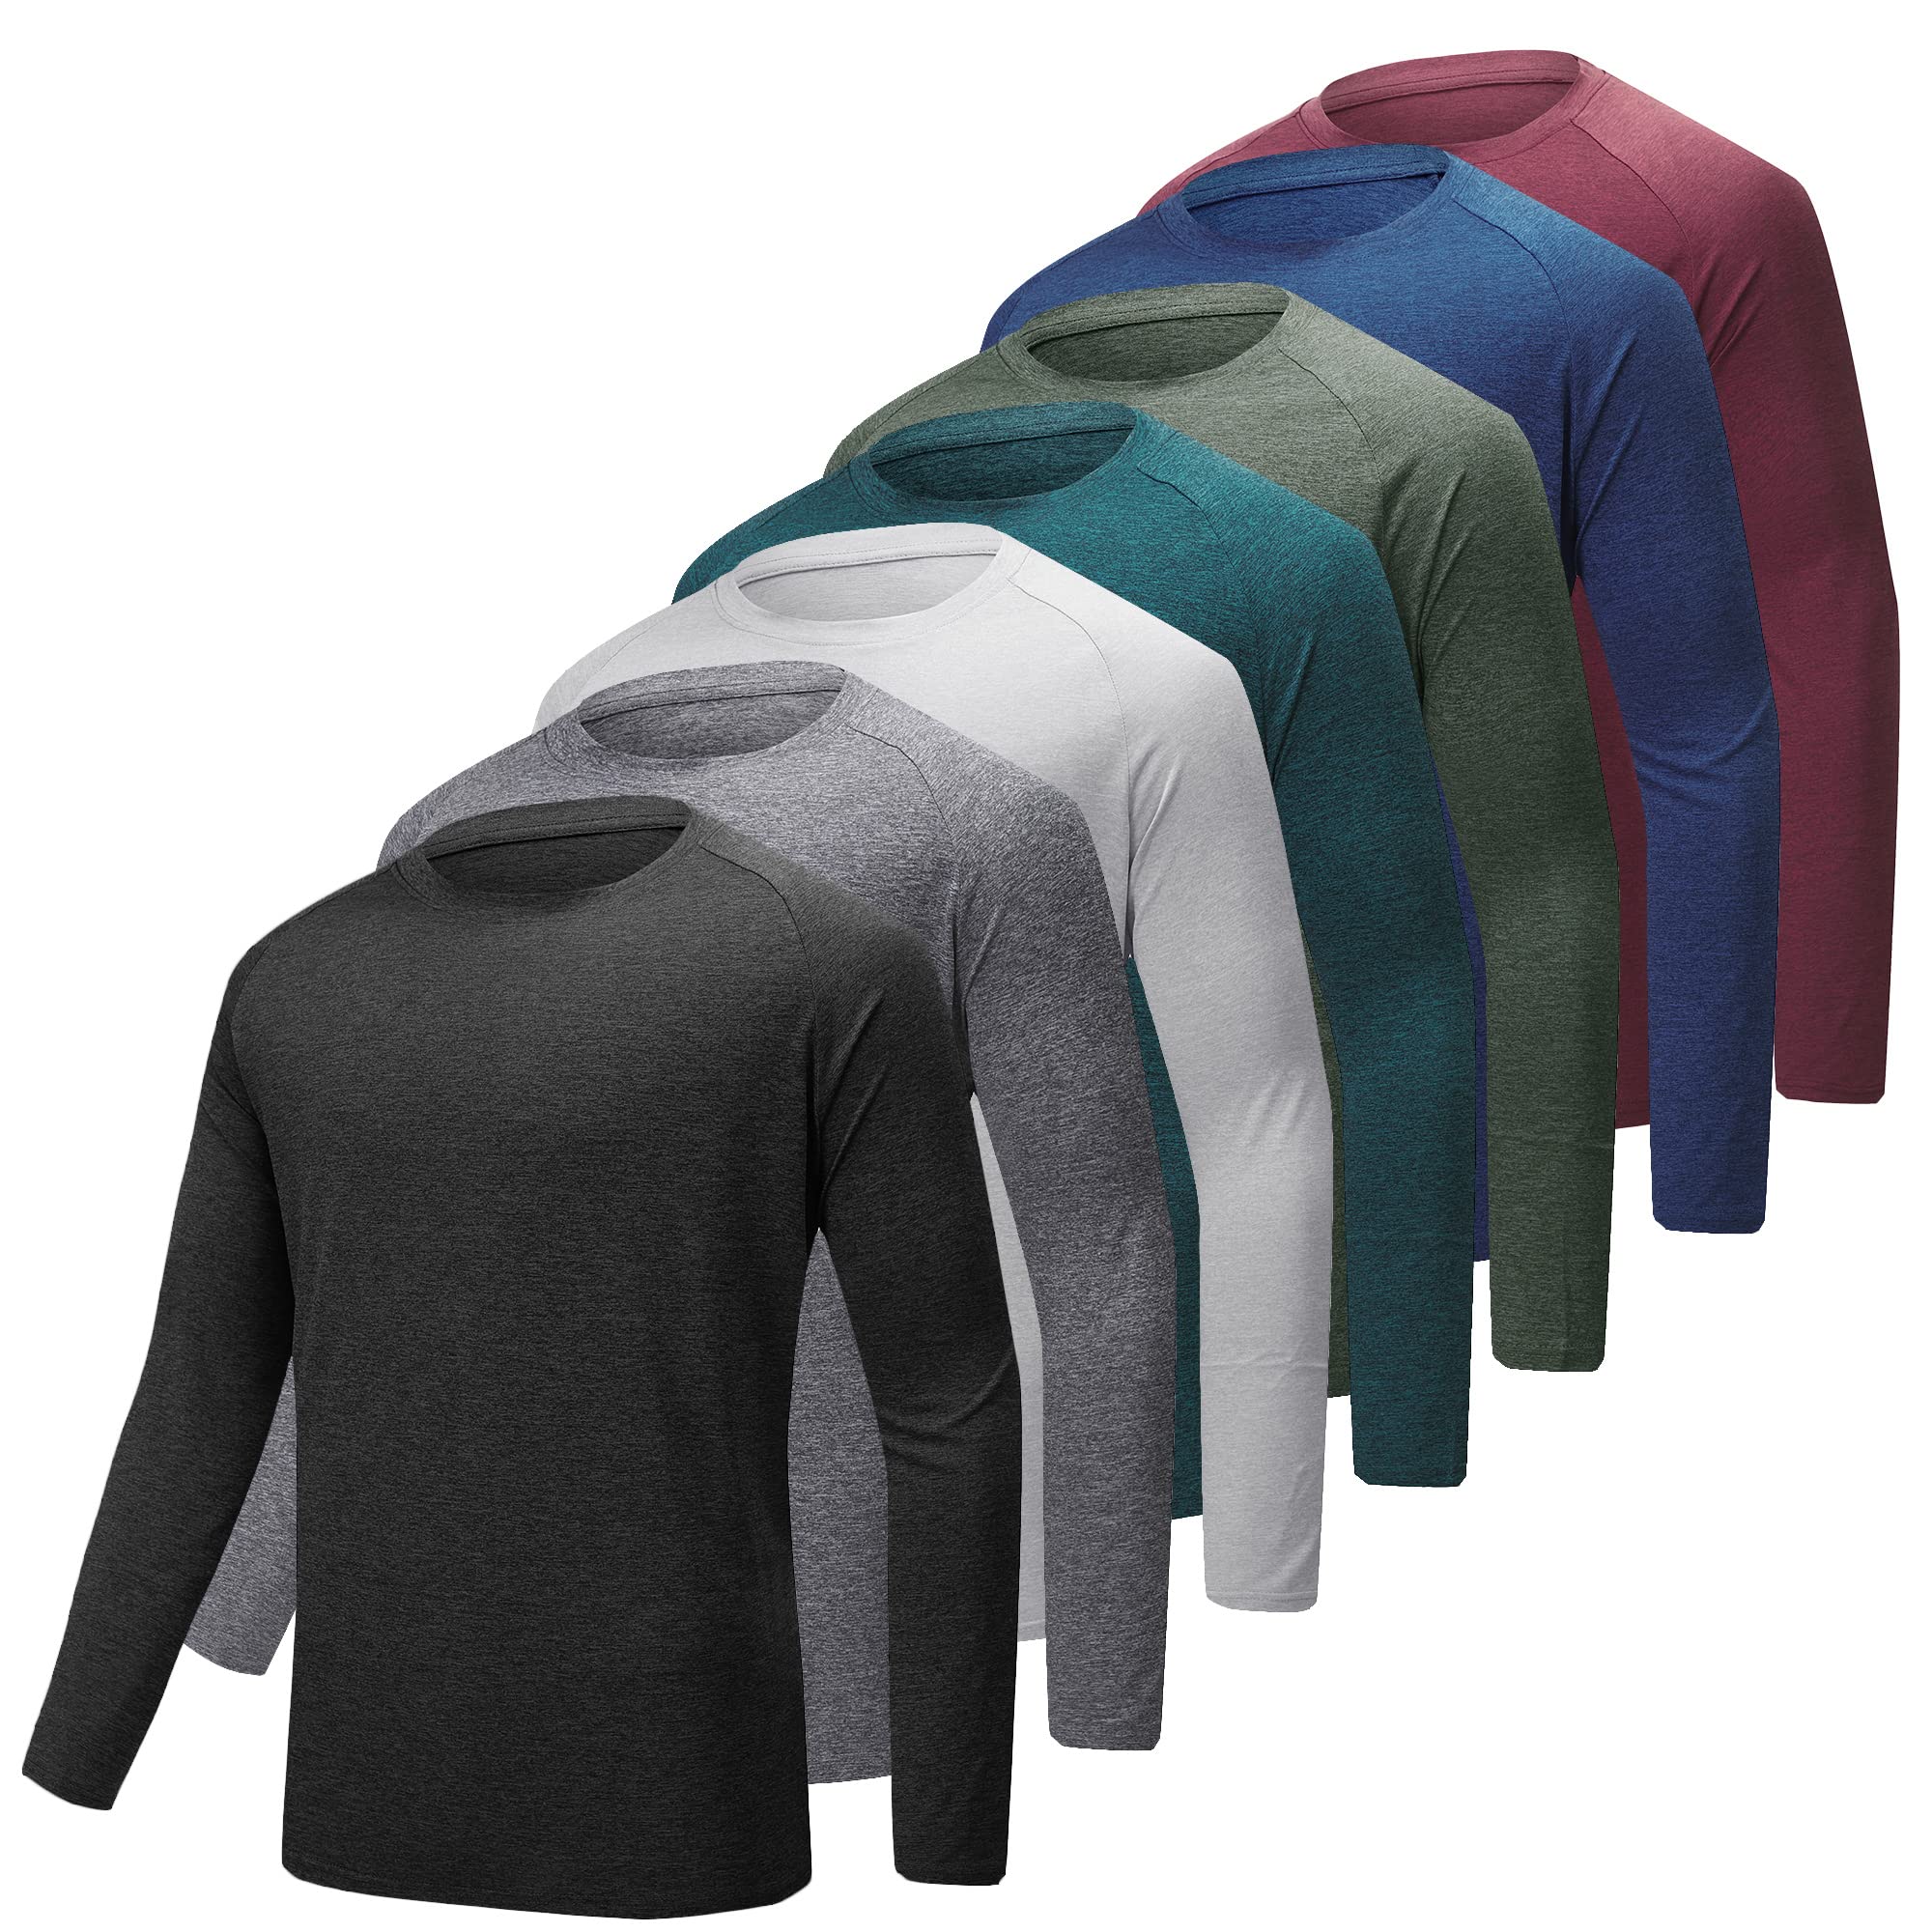 MLYENX 7 Pack Long Sleeve Shirts for Men Quick Dry Moisture Wicking Mens Long Sleeve Tee Shirts Workout T Shirts